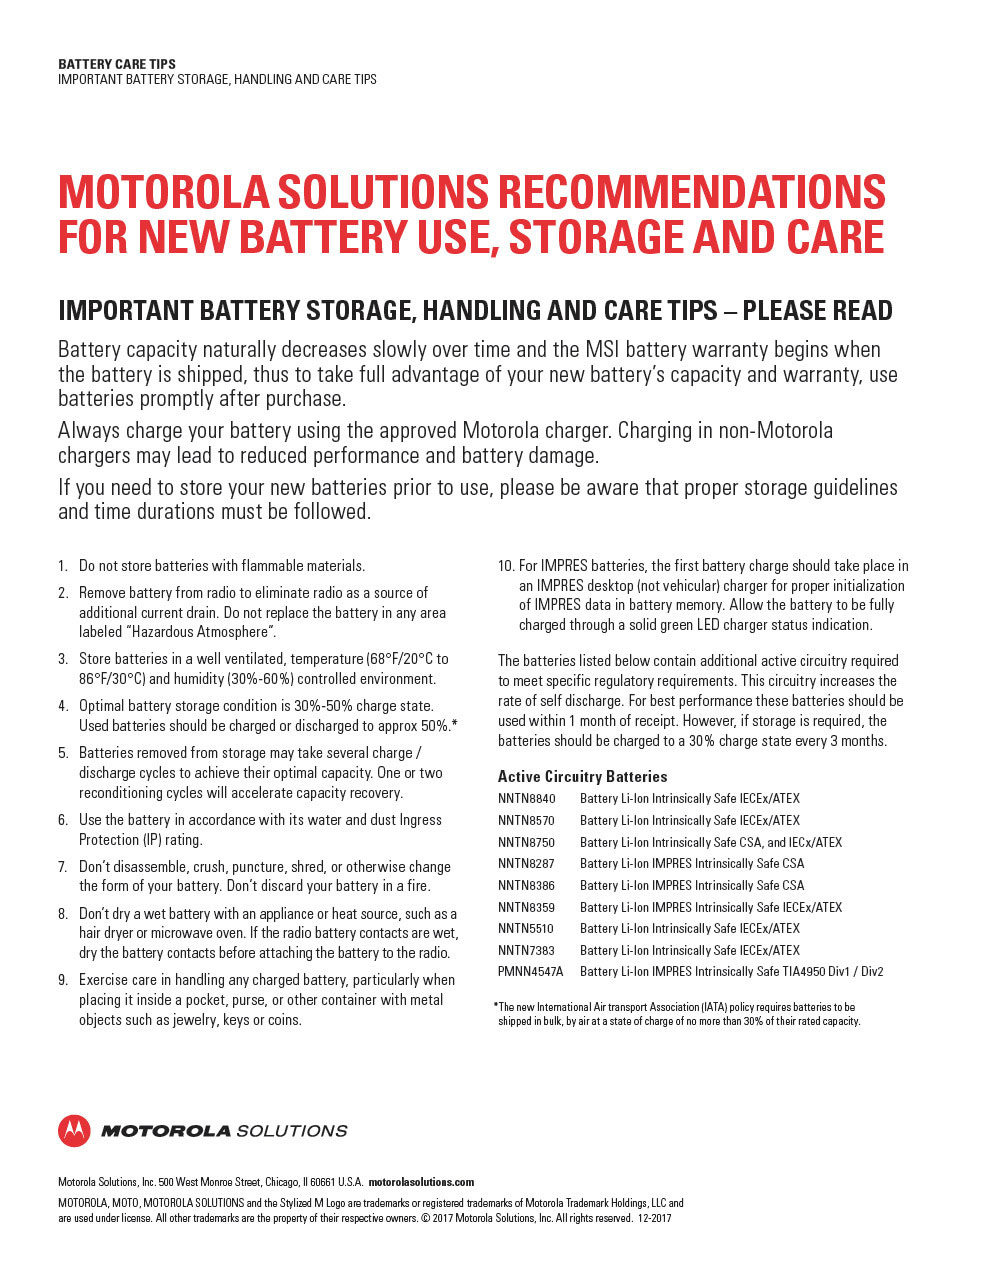 SET Motorola DP4401Ex ATEX Battery Antenna Charger MDH56QCC9LA3ANB